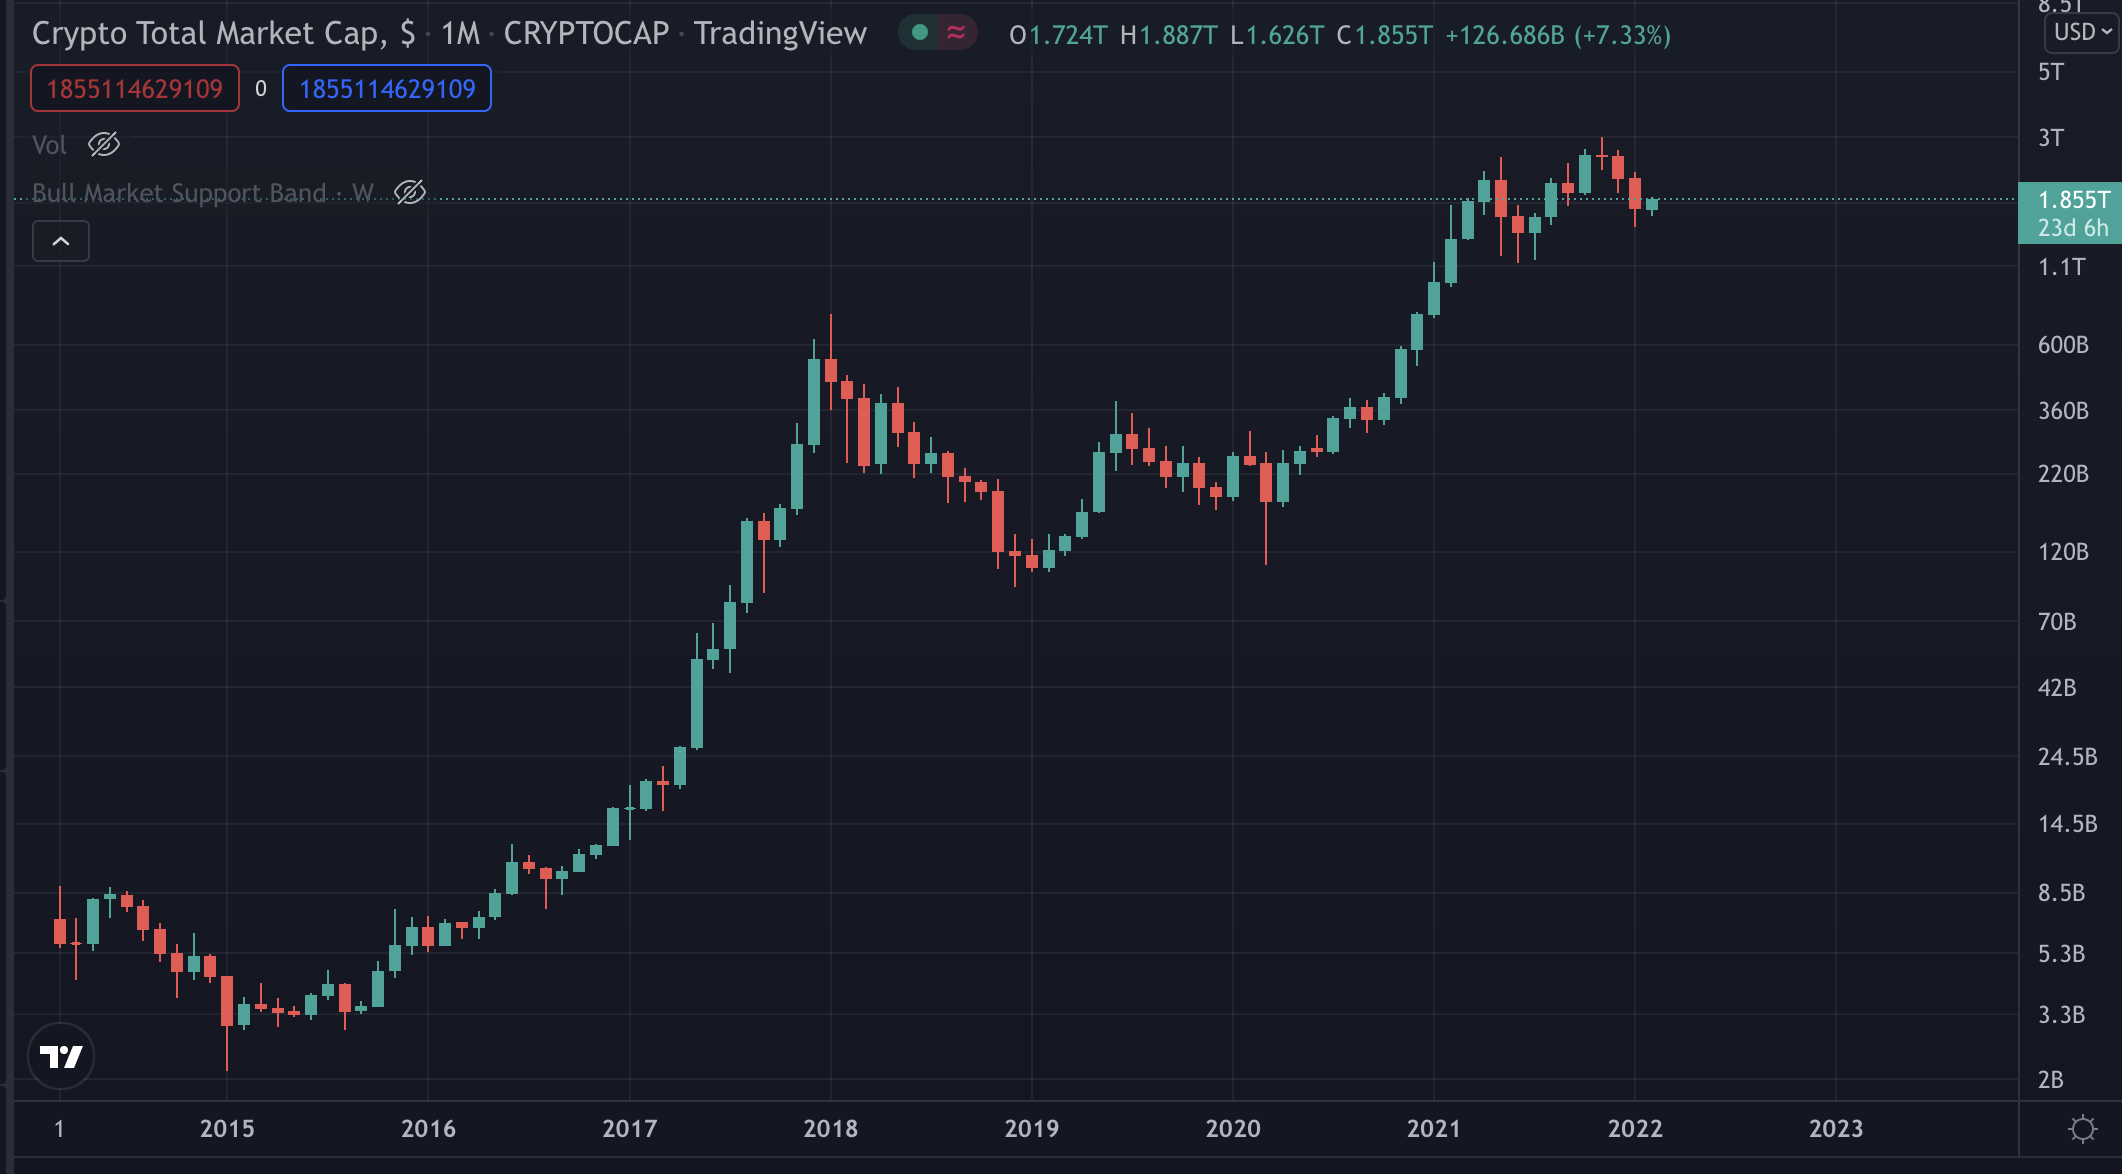 Total Crypto Market Cap - Source: TradingView